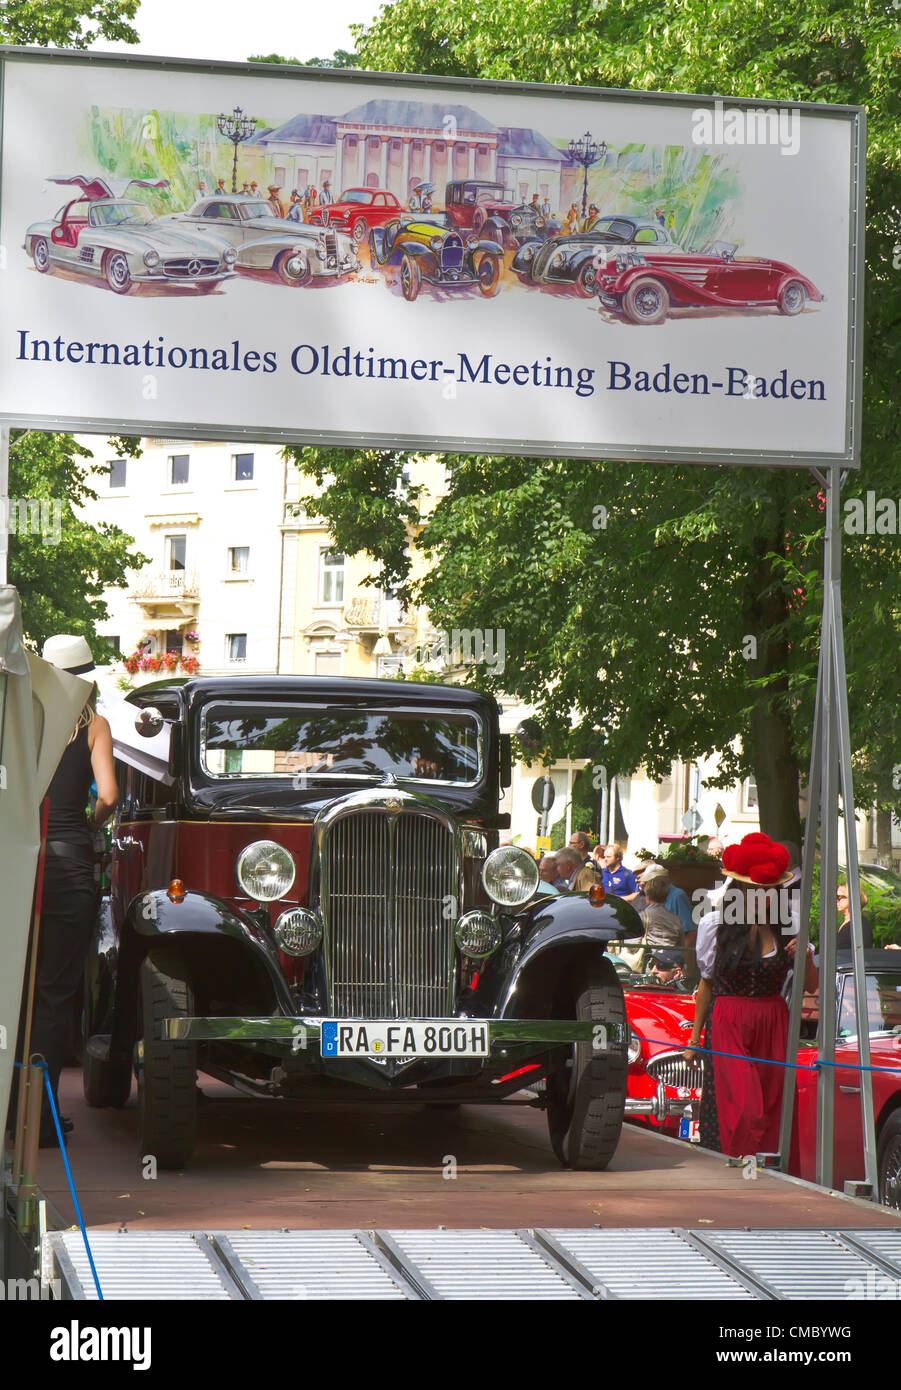 Baden-Baden - July 13, 2012: International Exhibition of old cars 'Internationales Oldtimer-Meeting Baden-Baden' Registration. Europe. Germany. Stock Photo